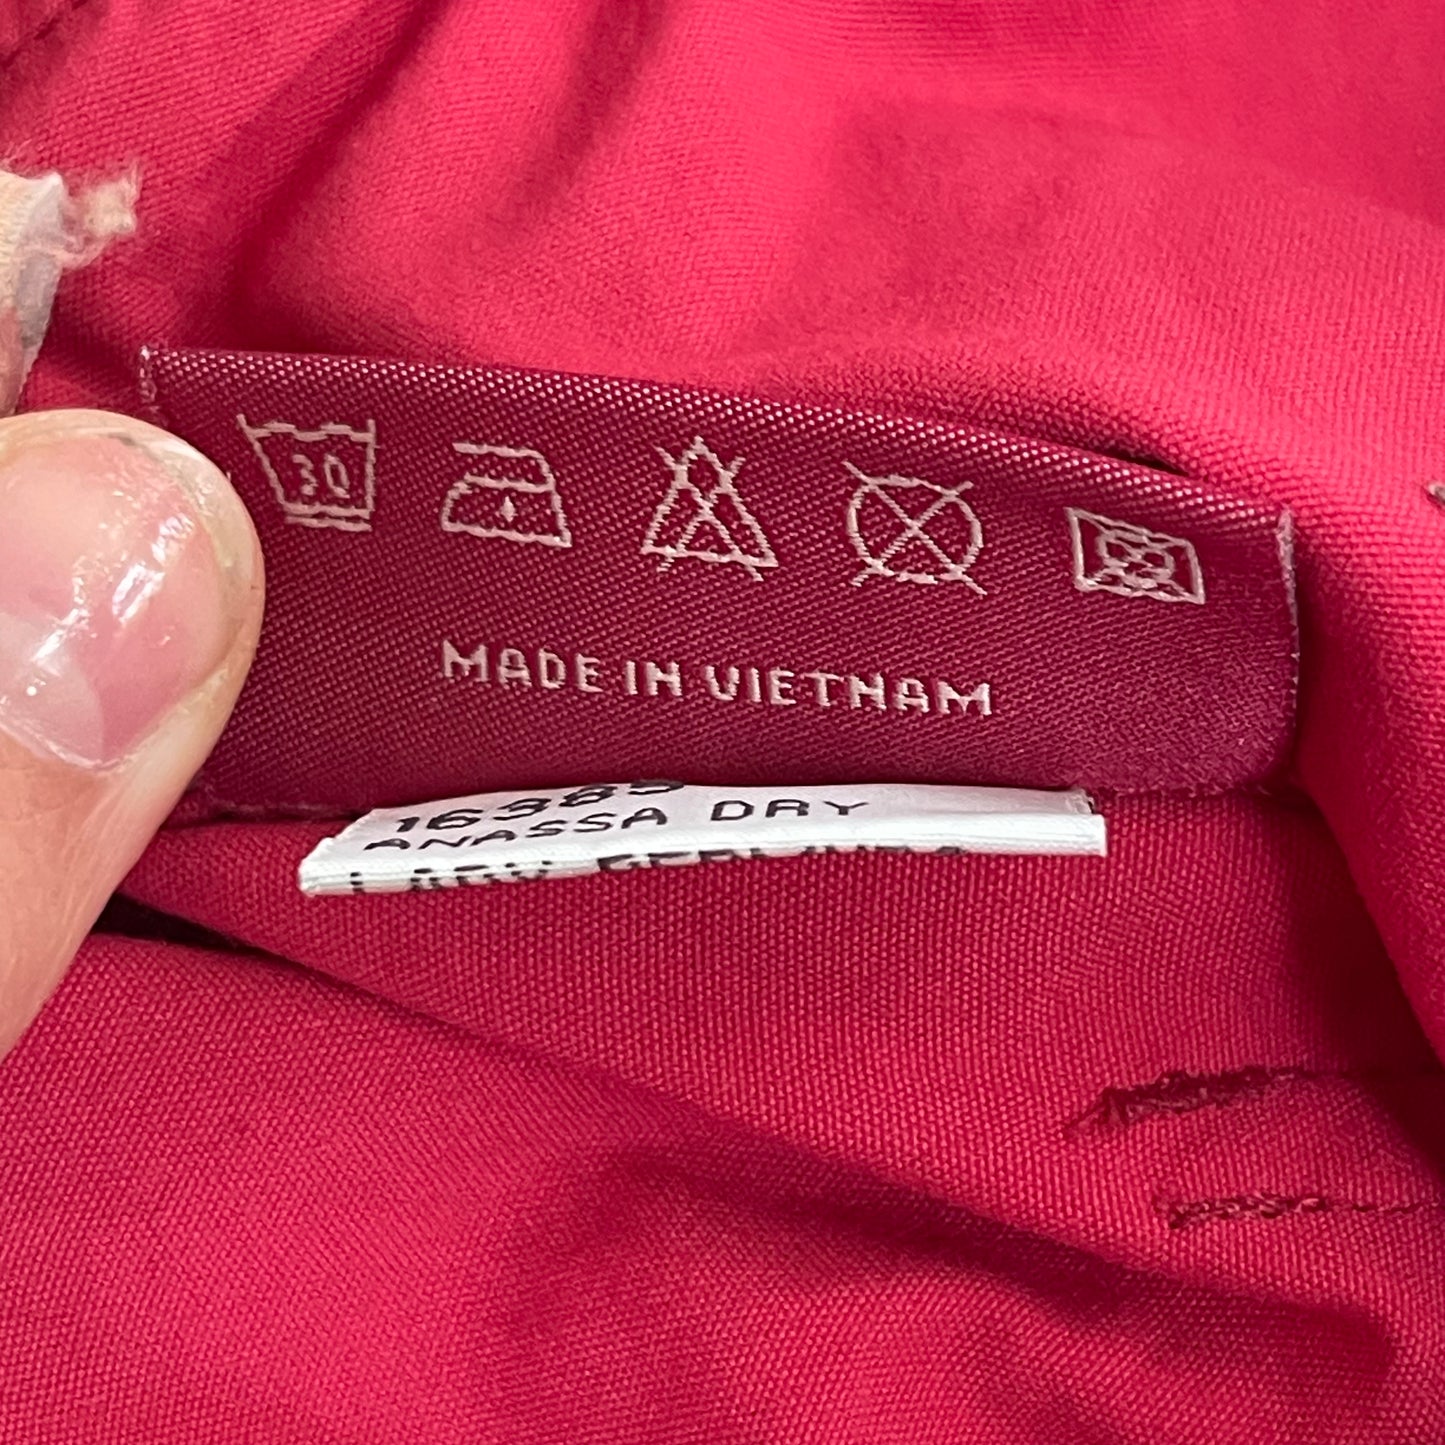 Kurze Trekkinghose Salewa (Damen S) Dry-Tech Shorts pink